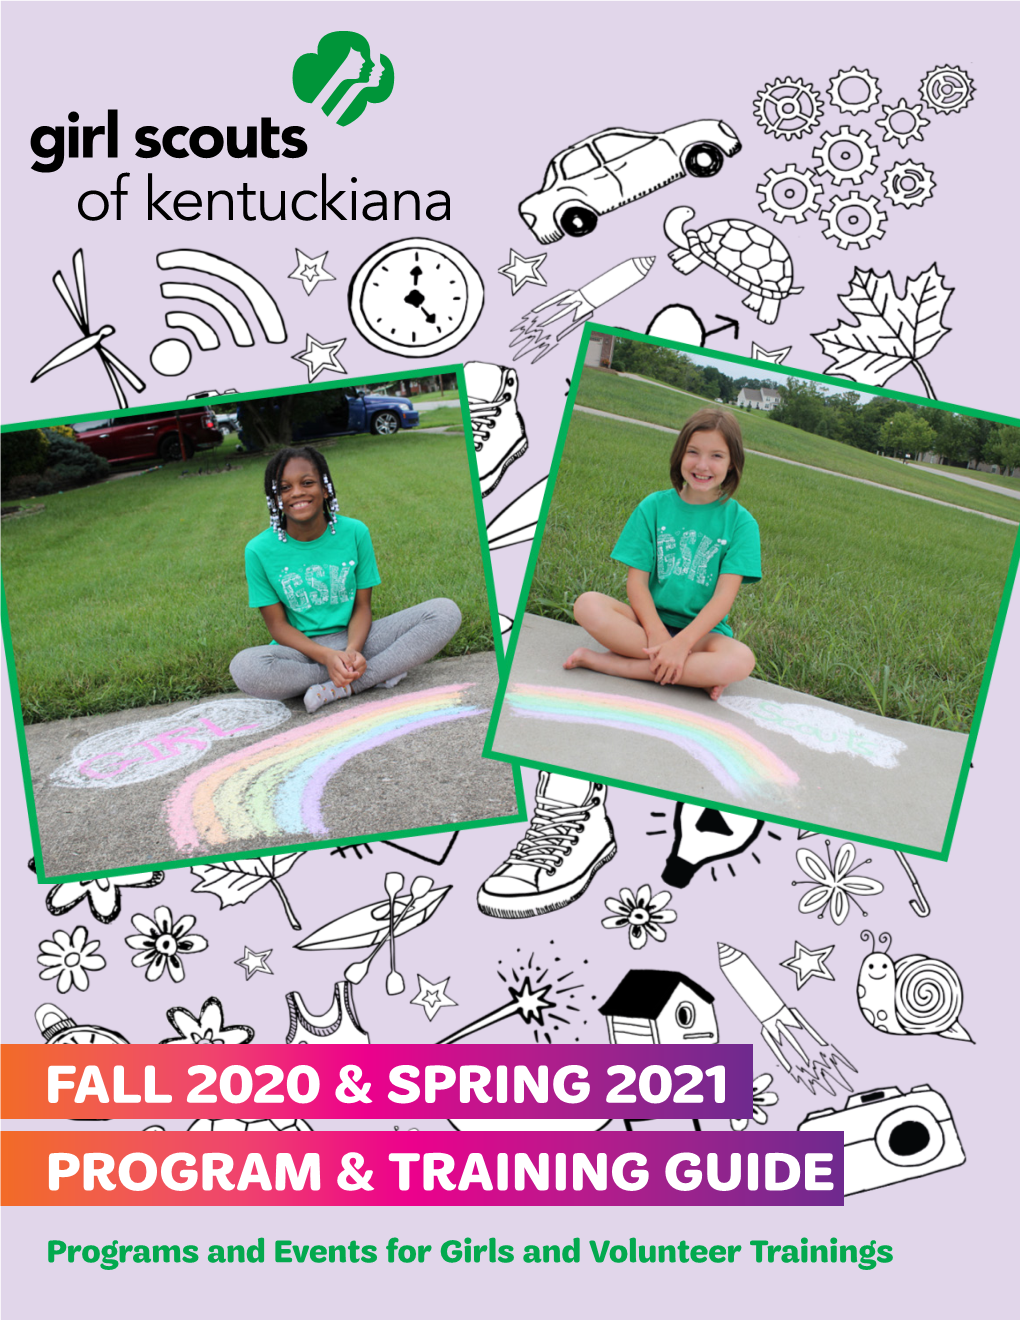 Fall 2020 & Spring 2021 Program & Training Guide